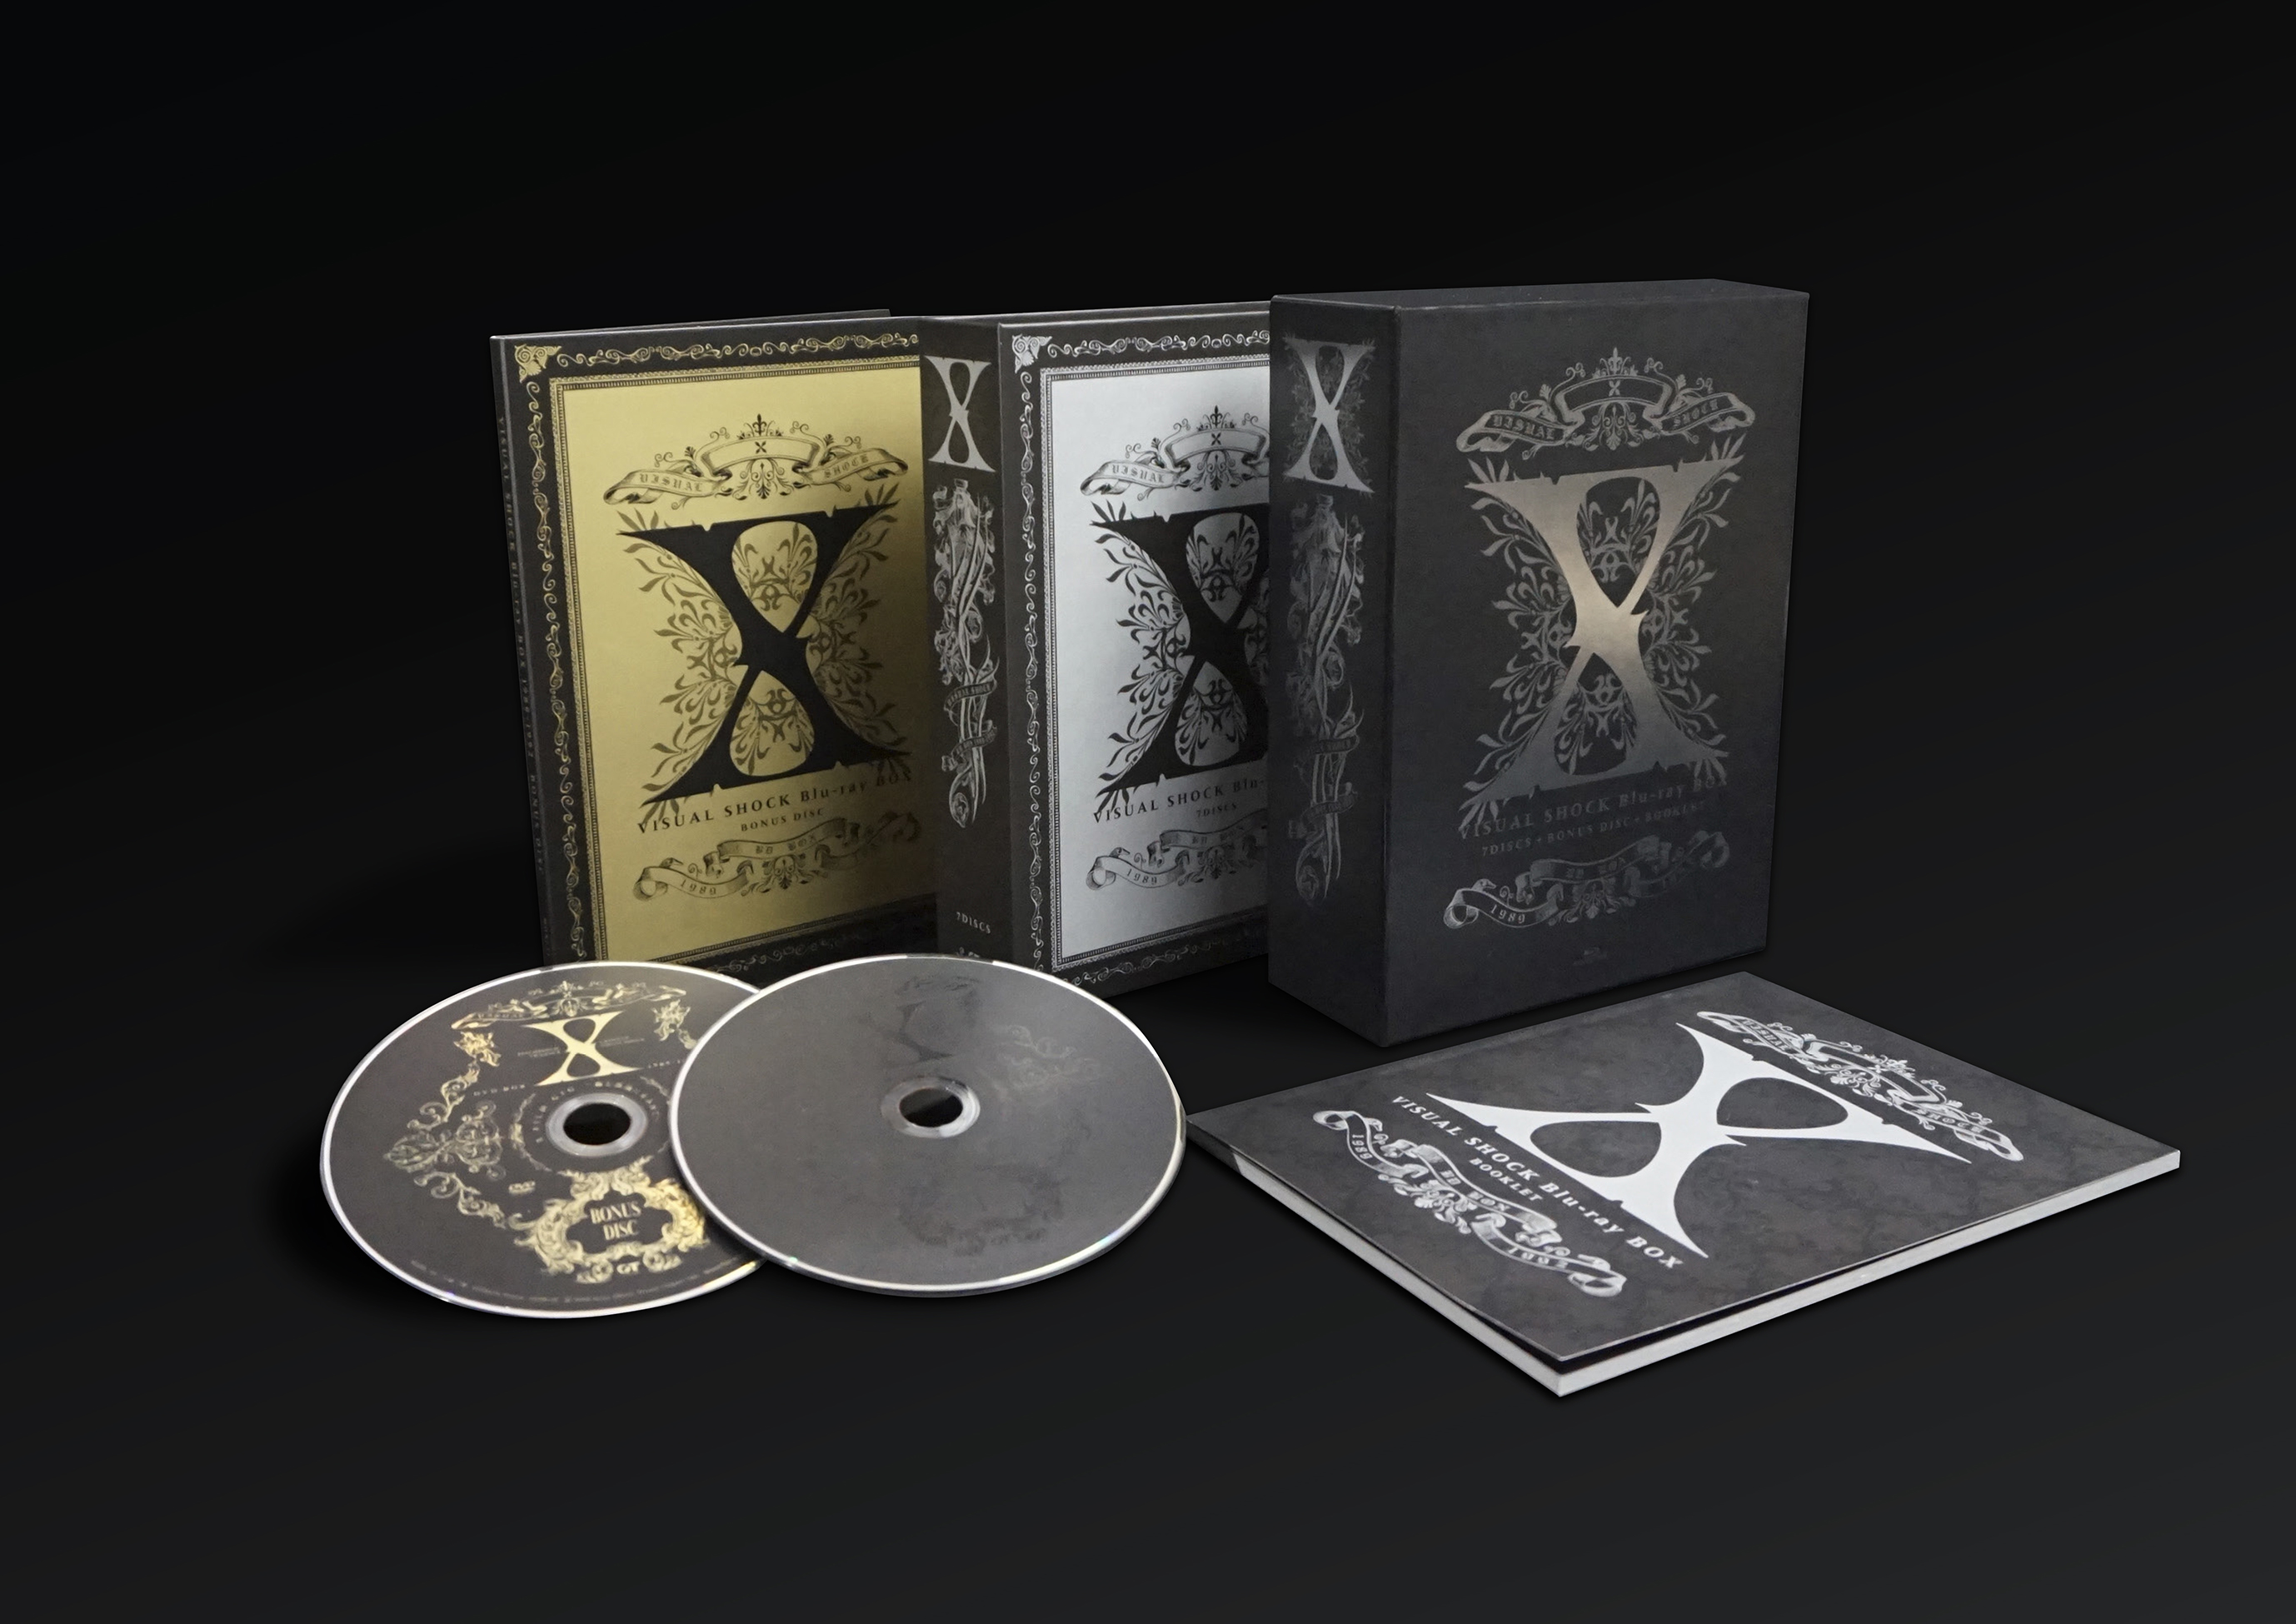 X/X VISUAL SHOCK Blu-ray BOX 1989-1992-